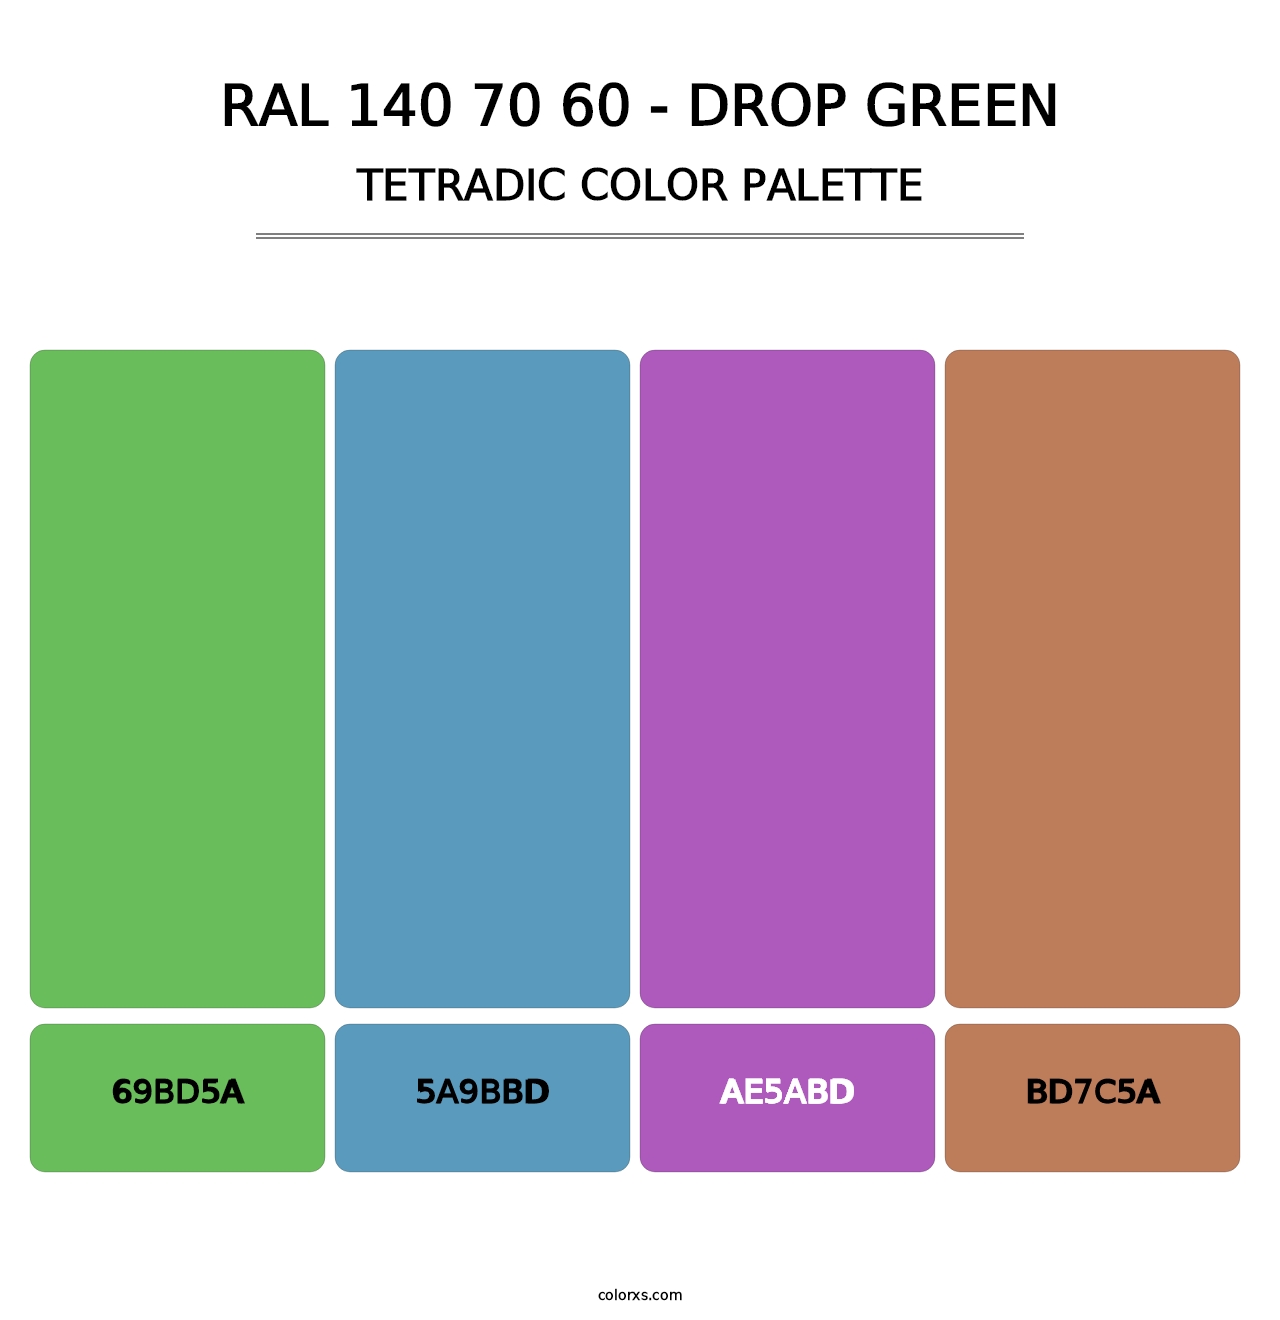 RAL 140 70 60 - Drop Green - Tetradic Color Palette